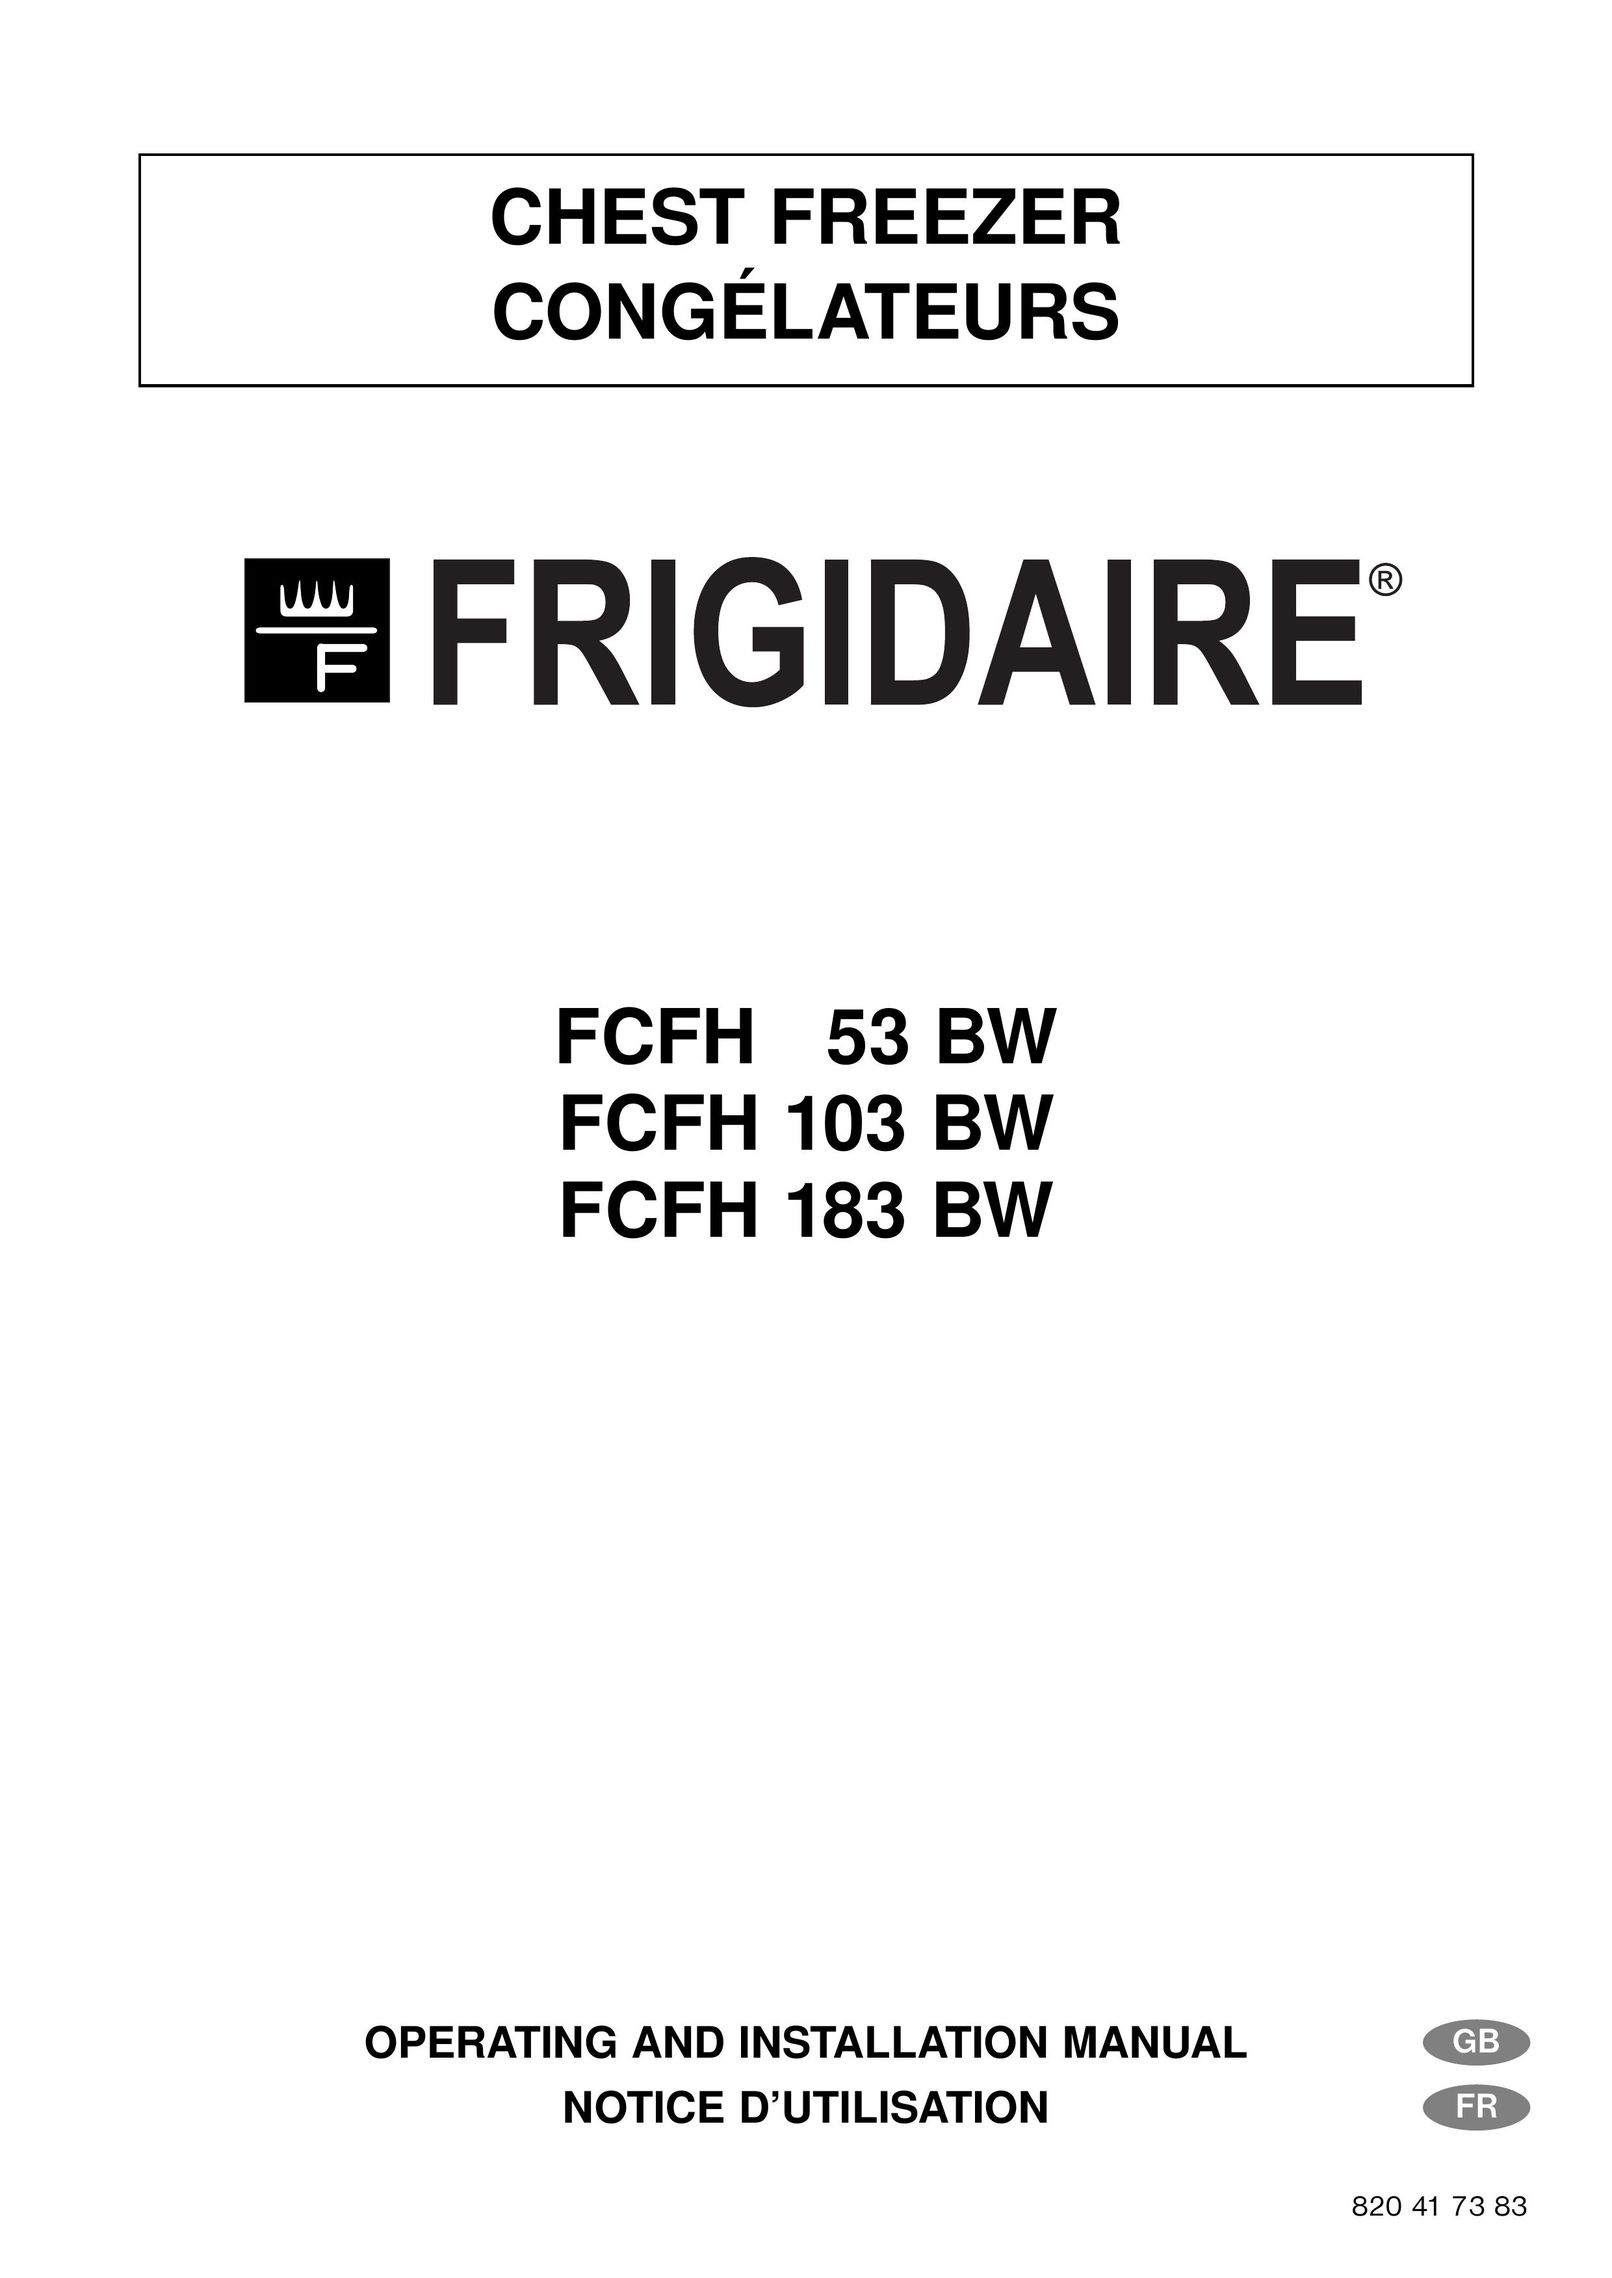 Frigidaire FCFH 53 BW Freezer User Manual